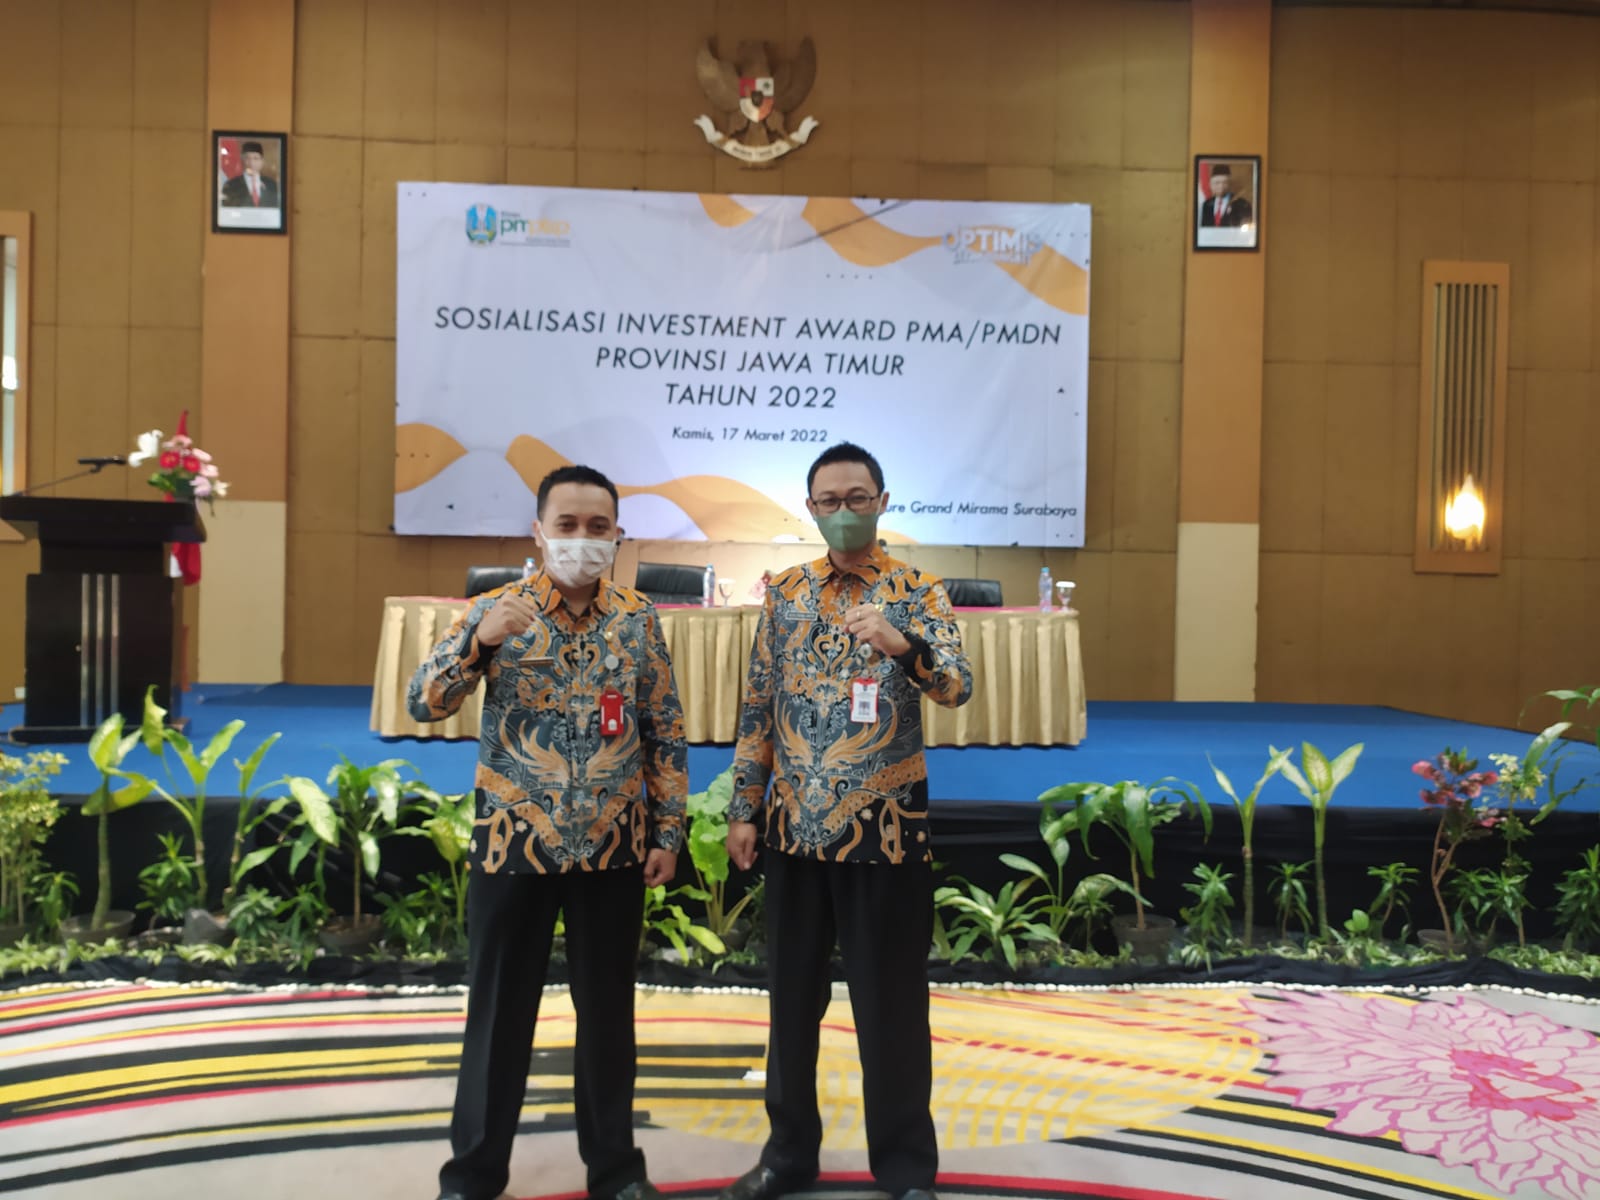 Sosialisasi Investment Award PMA/PMDN Provinsi Jawa Timur Tahun 2022